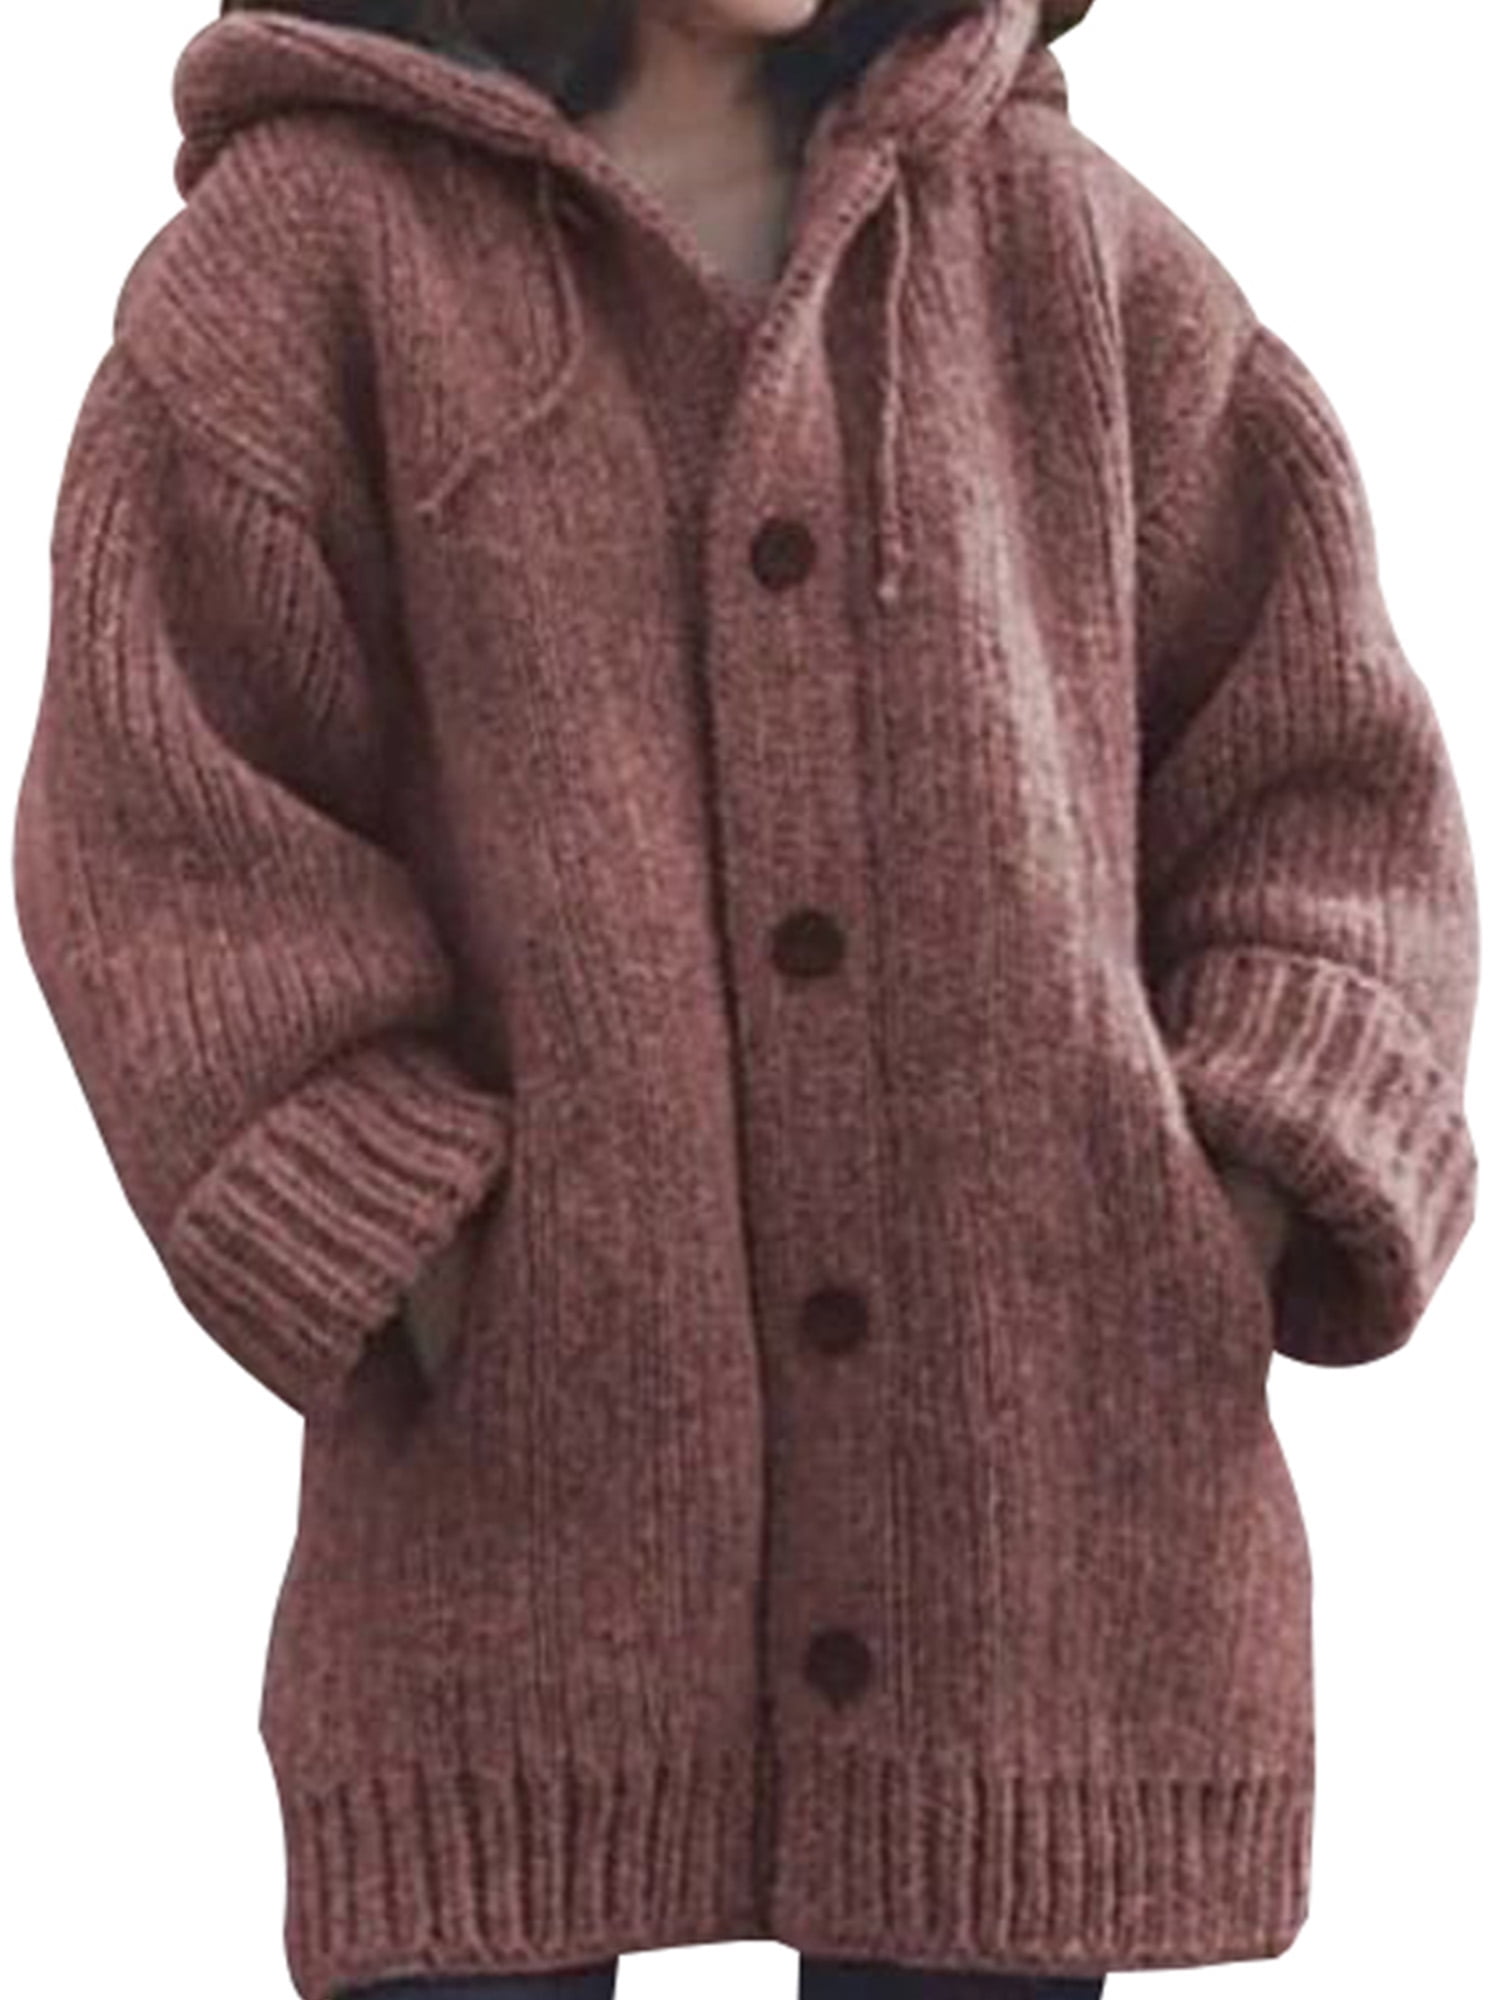 KLJR Men Cable Knit Hoodie Sweater Open Front Long Sleeve Cardigan Coat 